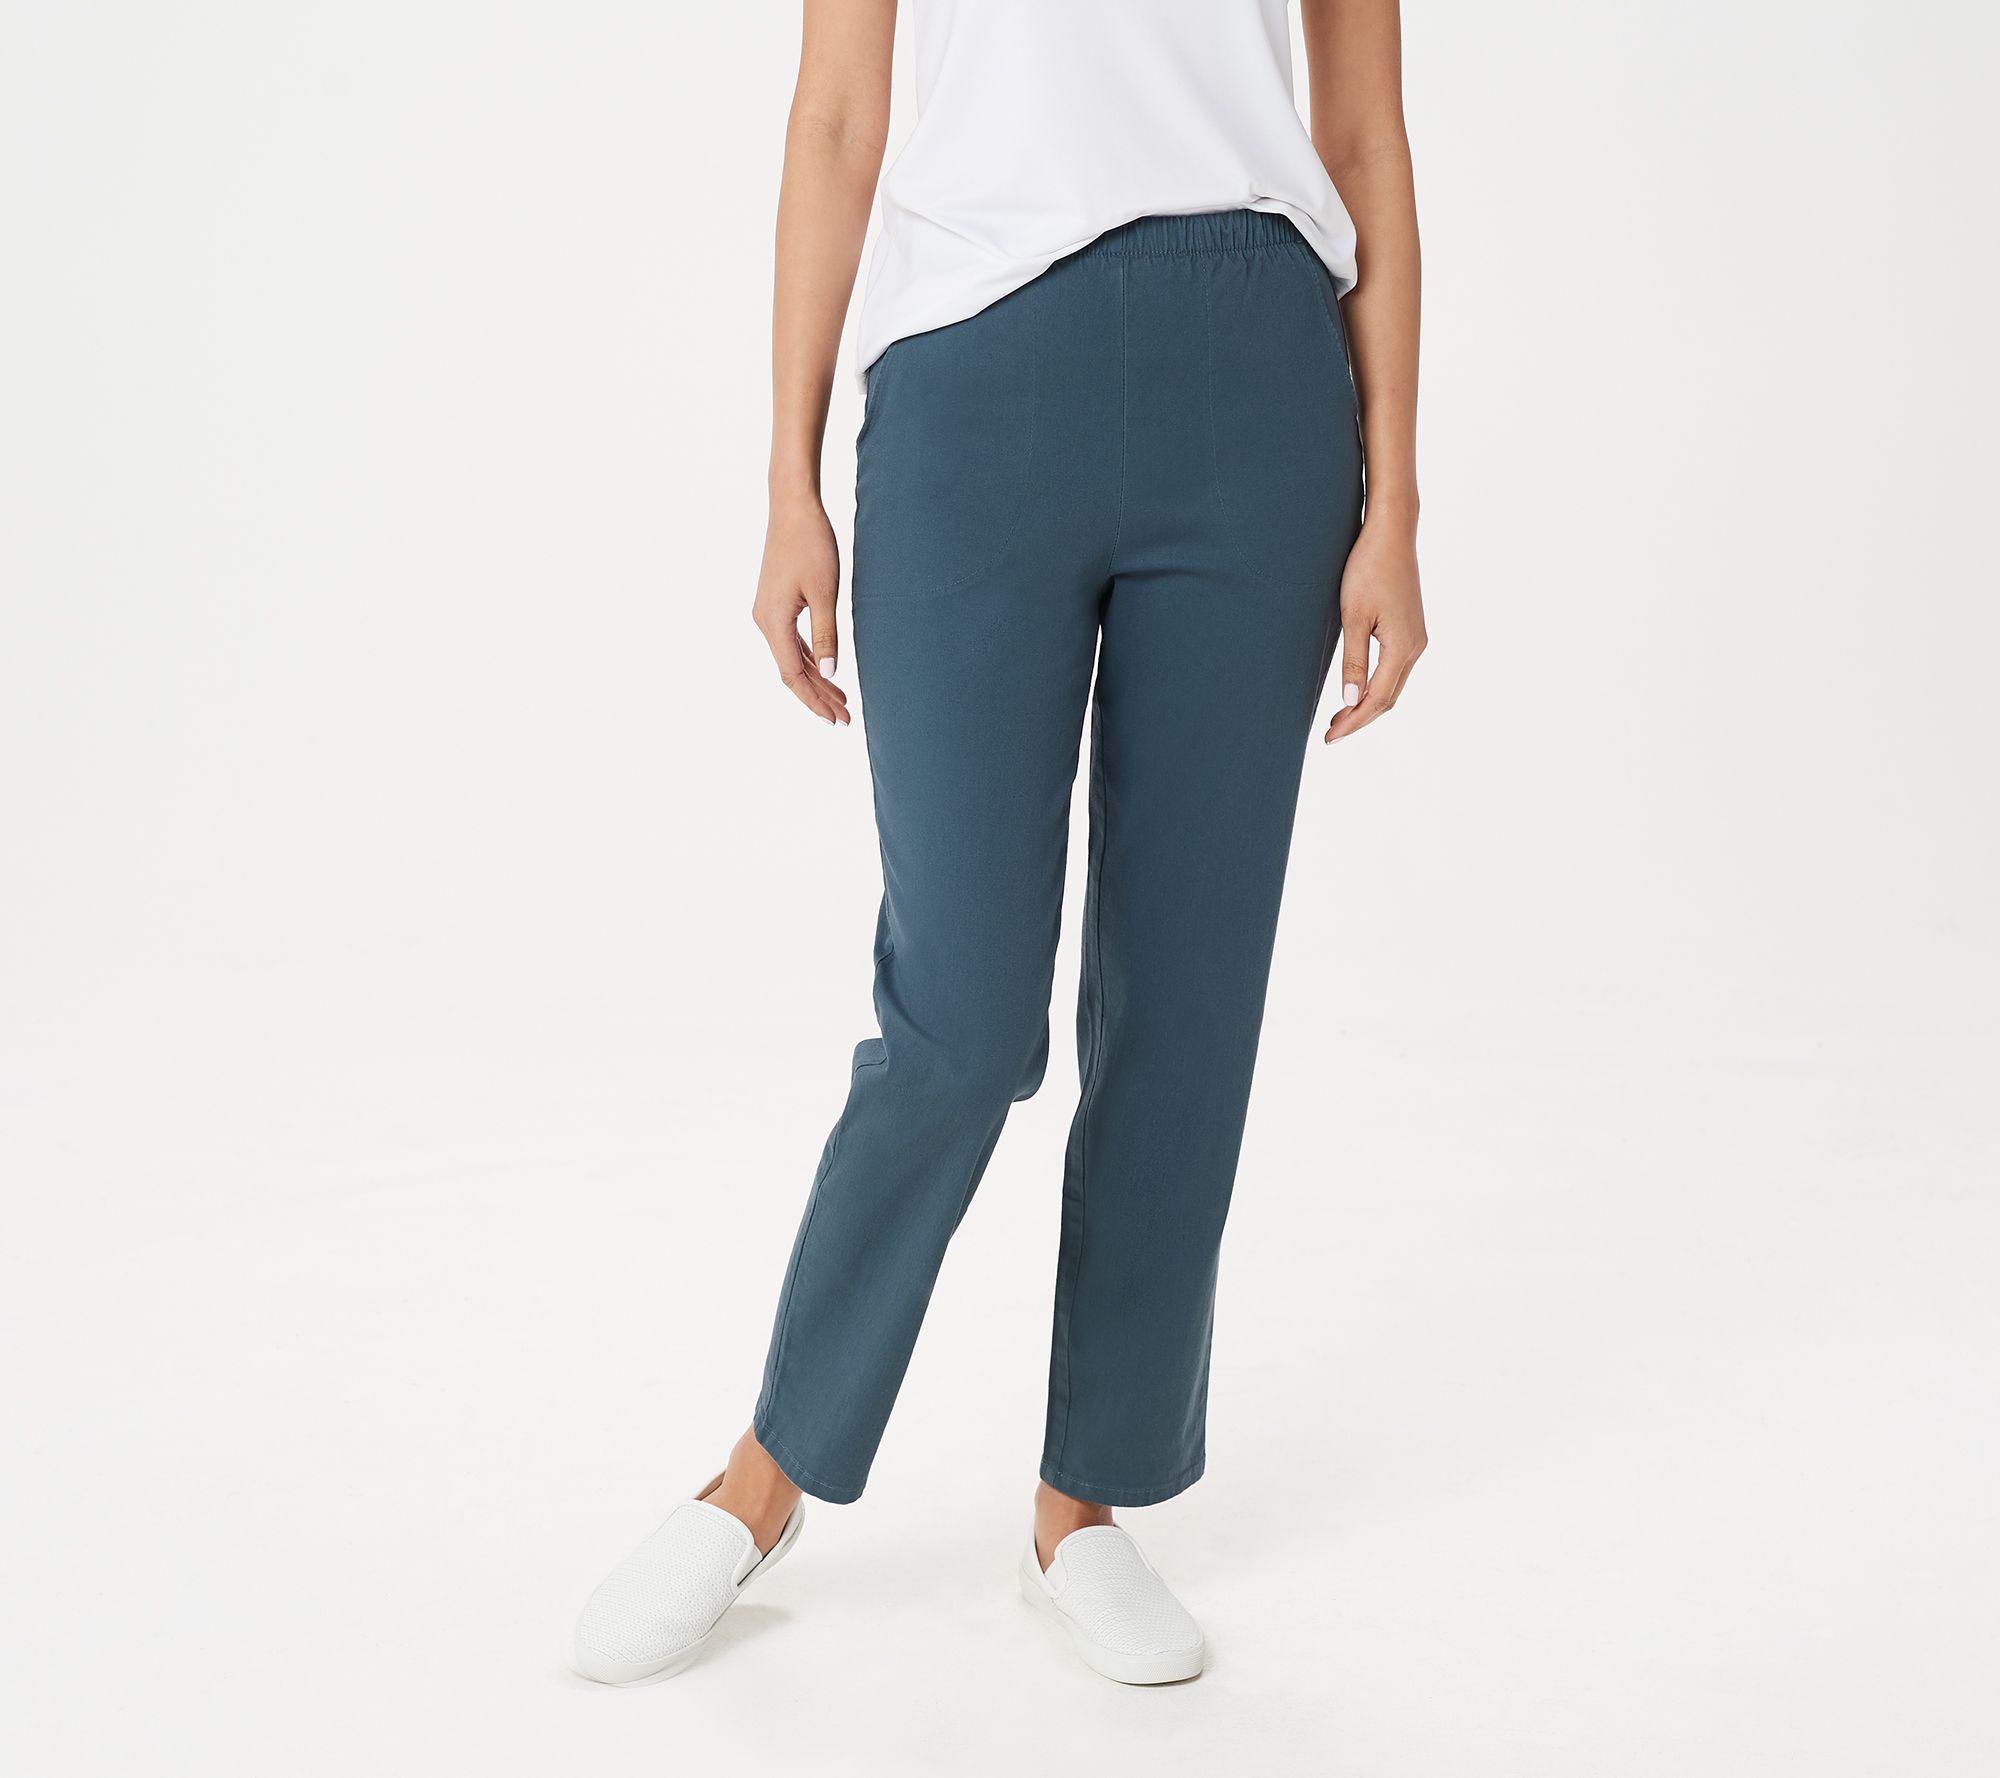 Denim & Co. Original Waist Stretch Regular Pants w/ Side Pockets